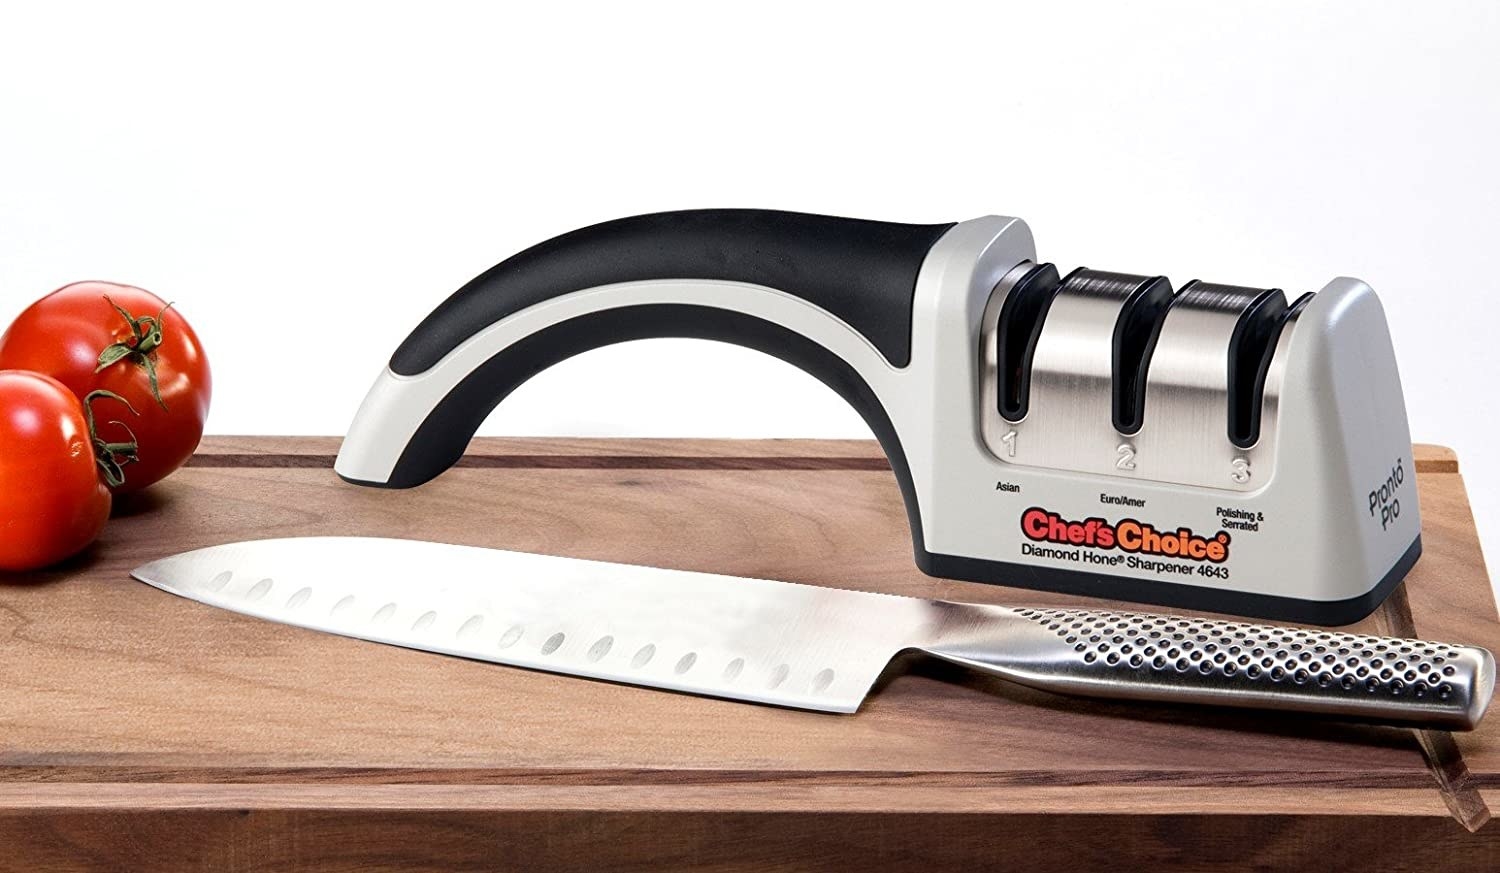 The Perfect Kitchen ORIGINAL Model 4643 Knife Sharpener, Blade Sharpener 3  Stages Professional Knife Sharpening Tool for all kinds of Kitchen Knives